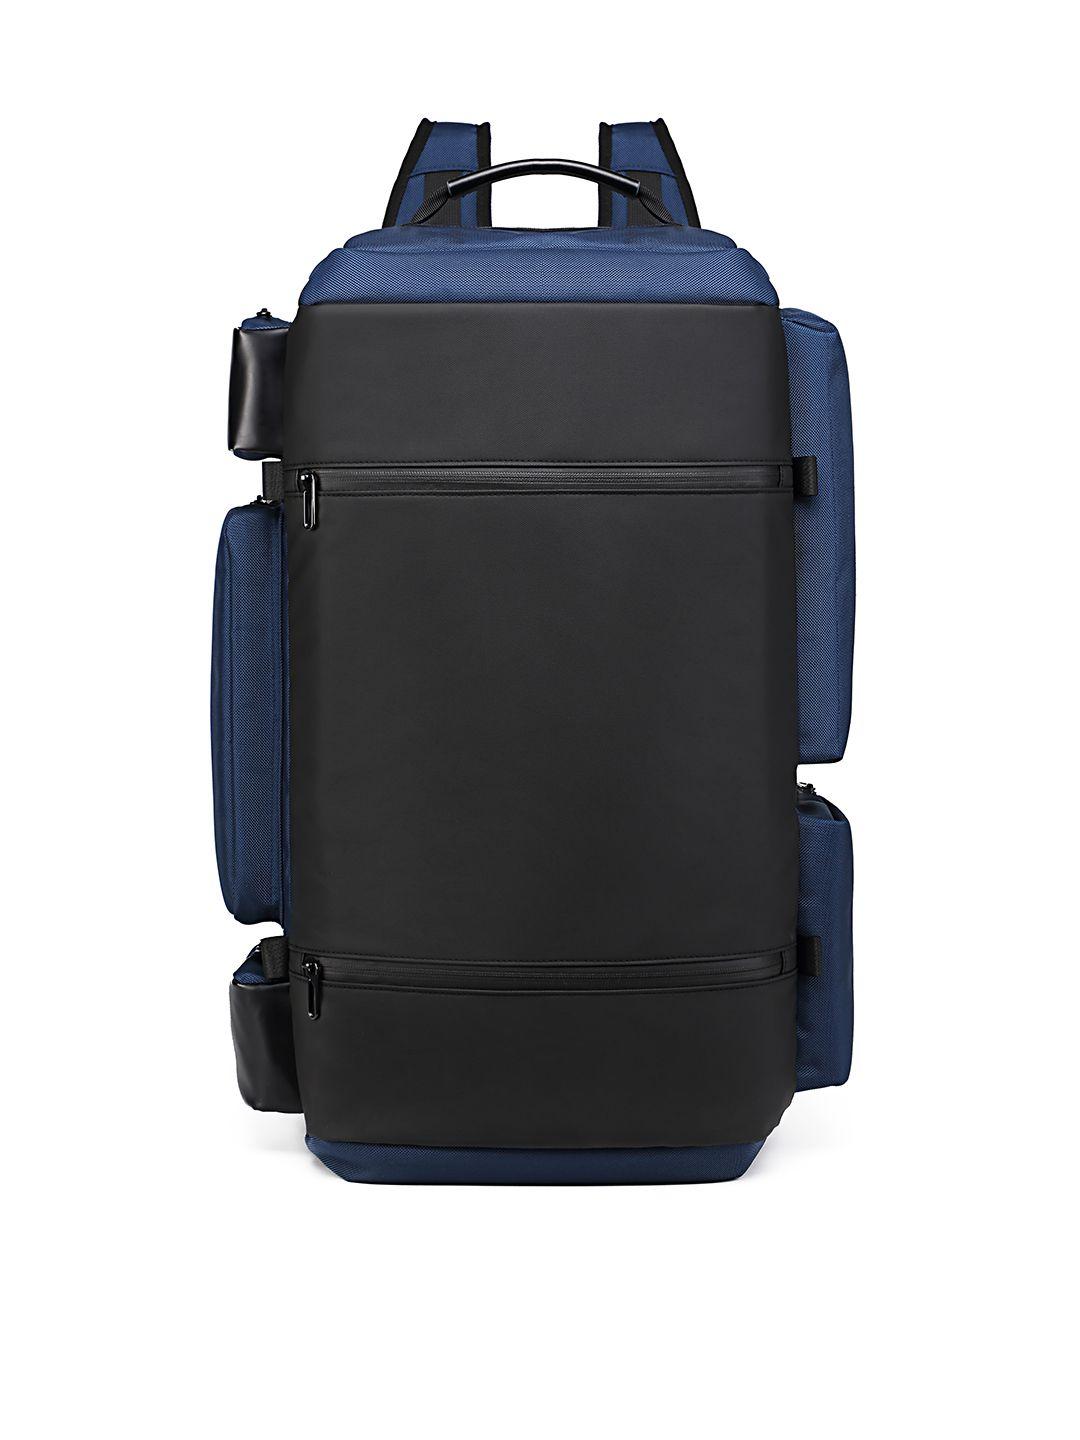 ozuko blue & black soft case medium backpack